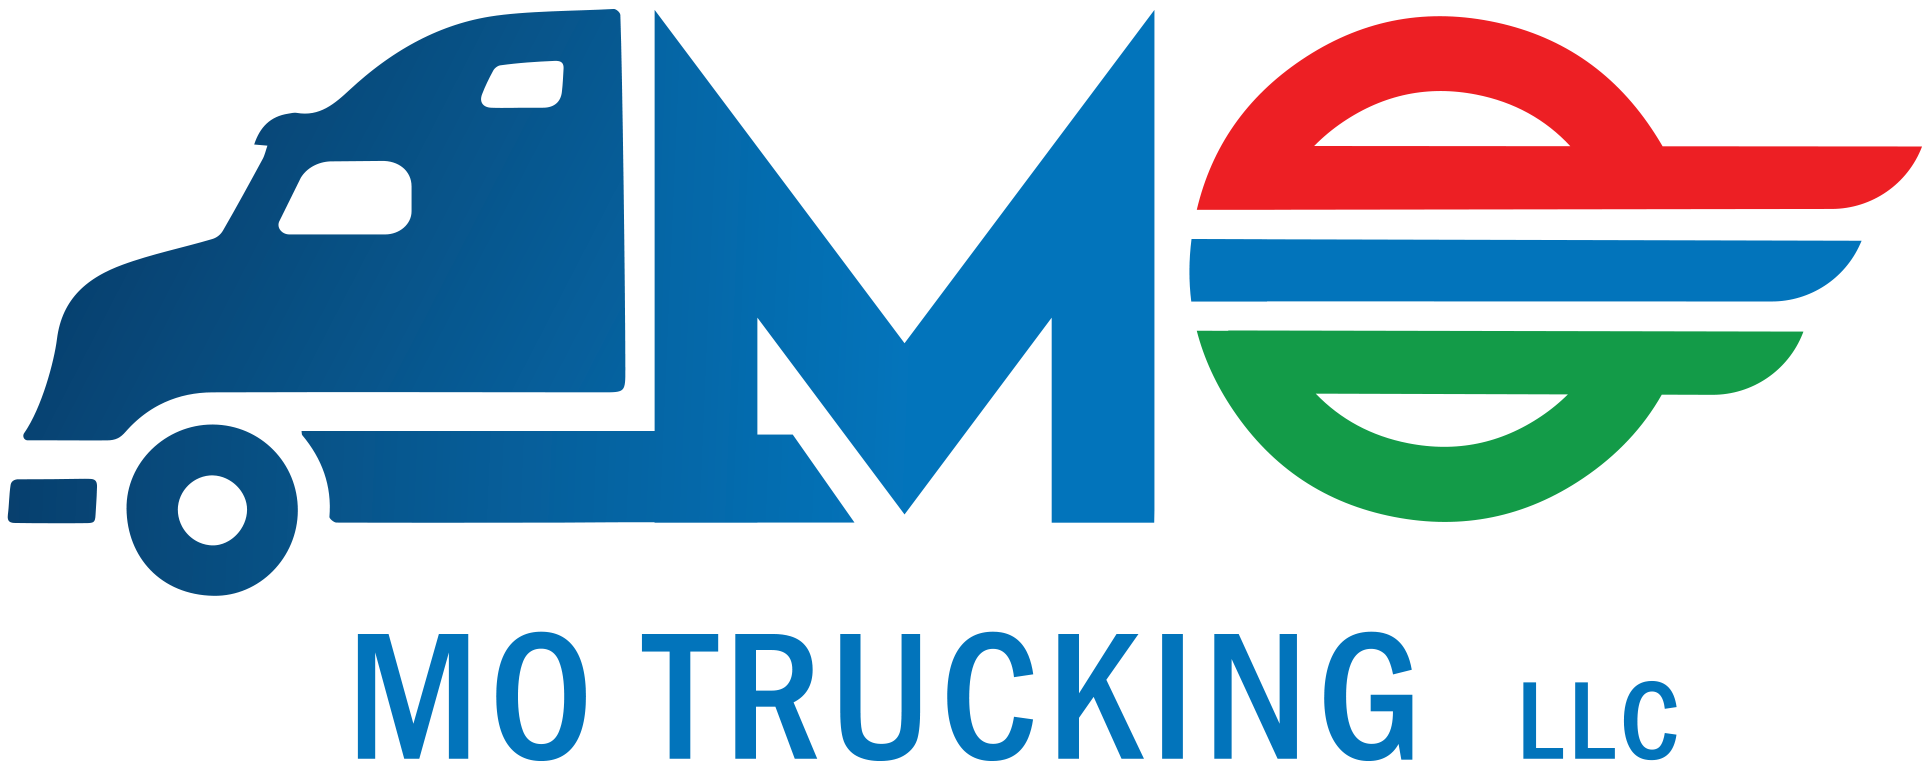 MO Trucking LLC logo